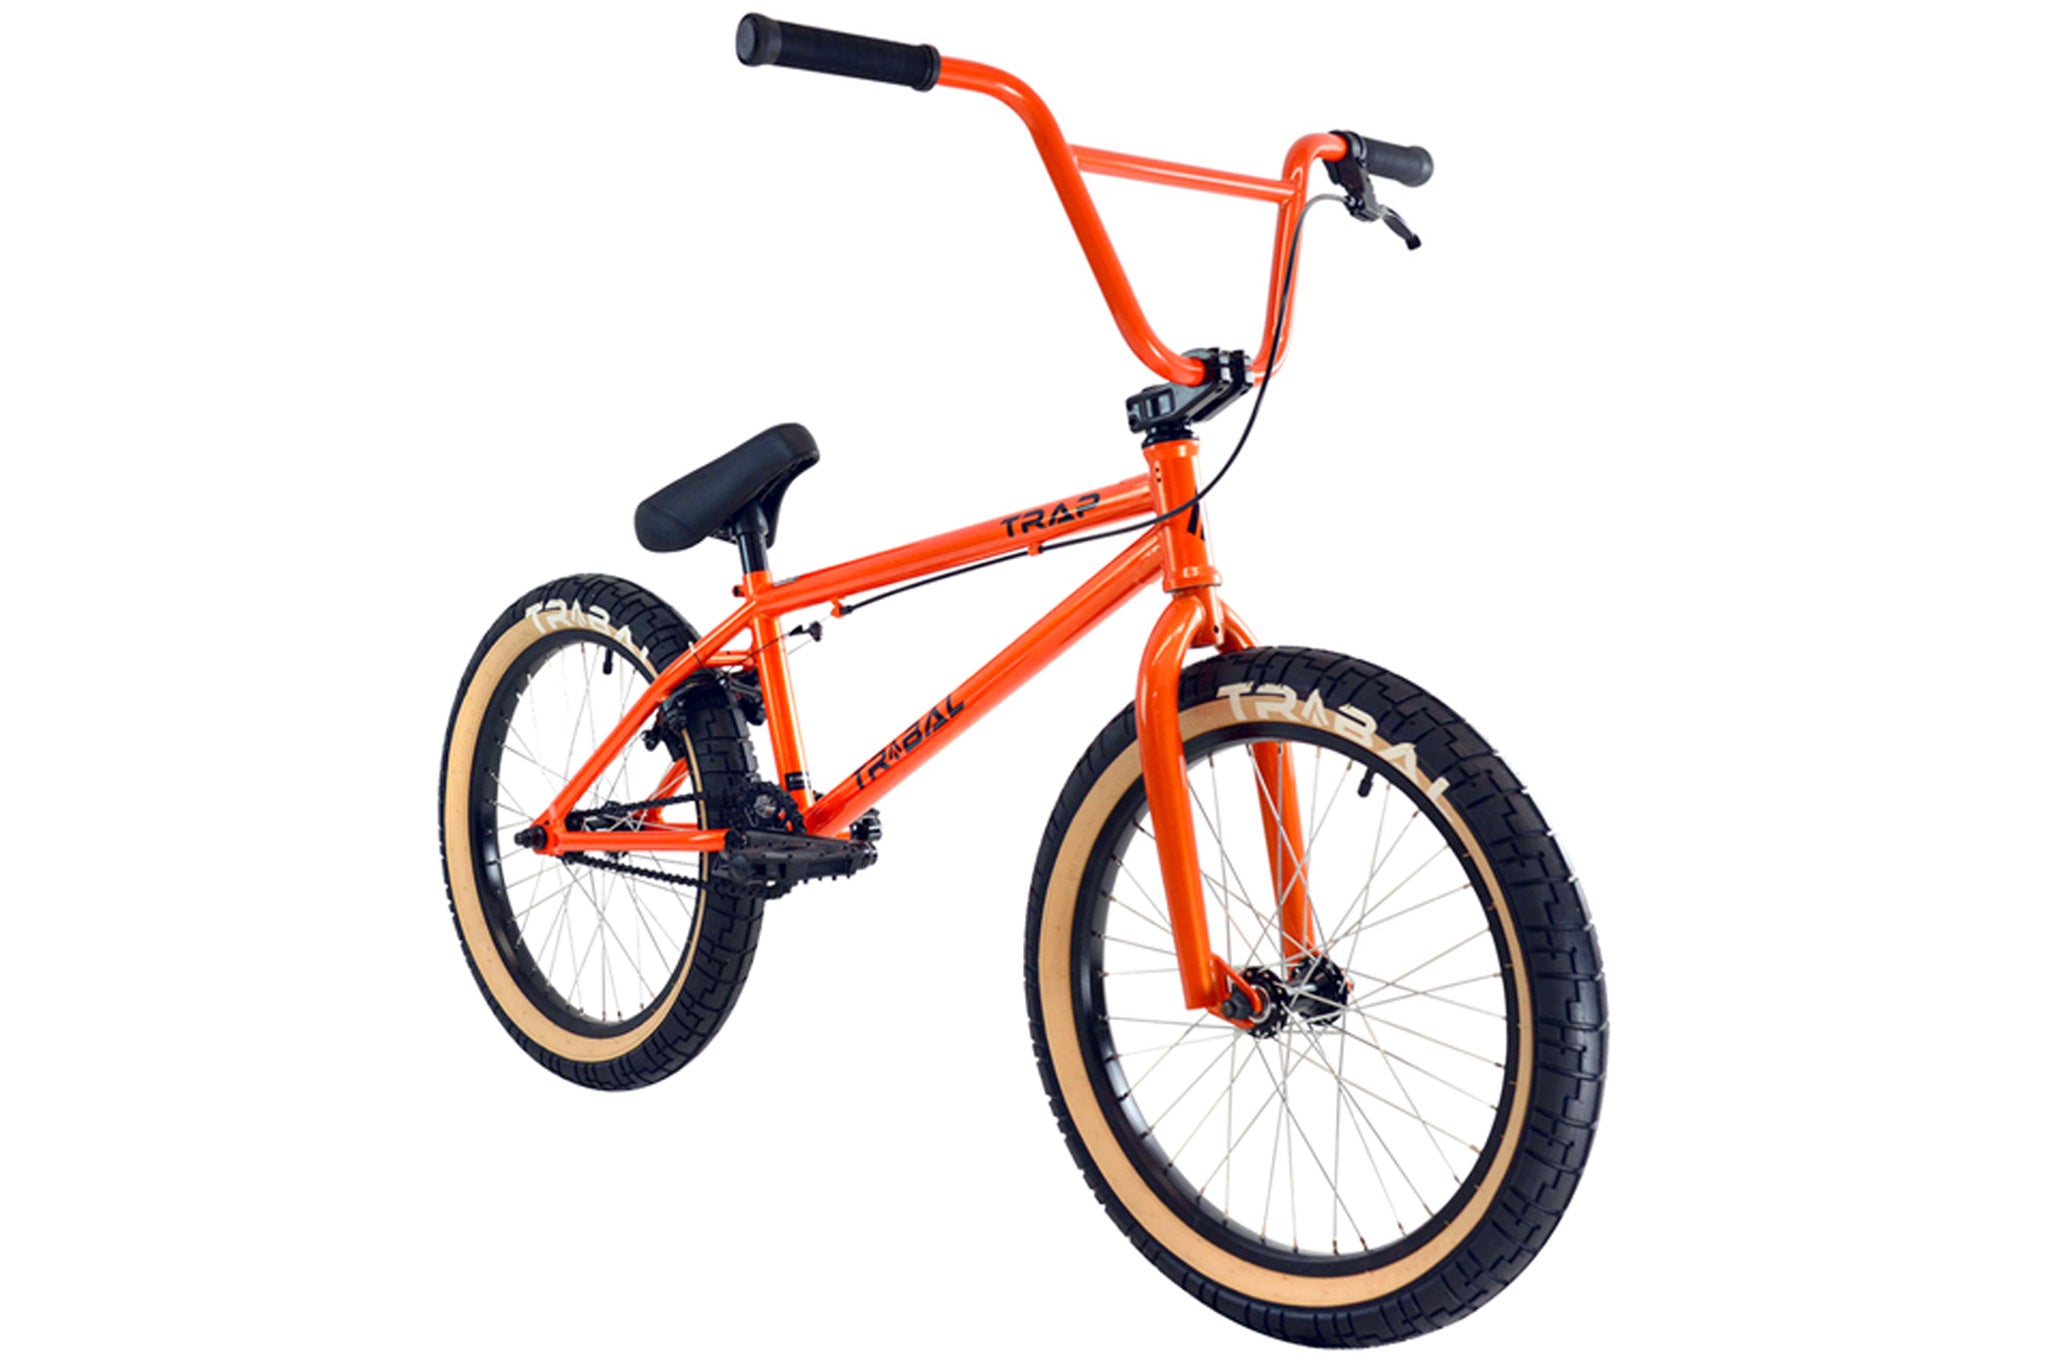 Tribal Trap BMX Bike - Ltd Edition Orange